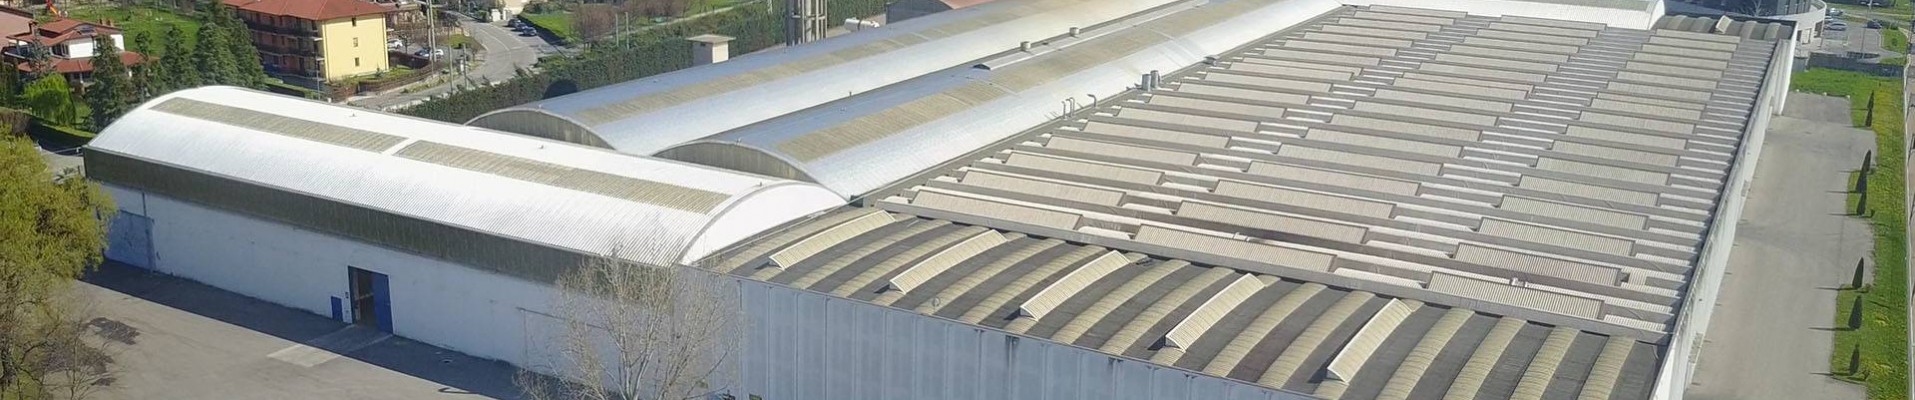 Aerial photograph of the Acciaitubi production facility